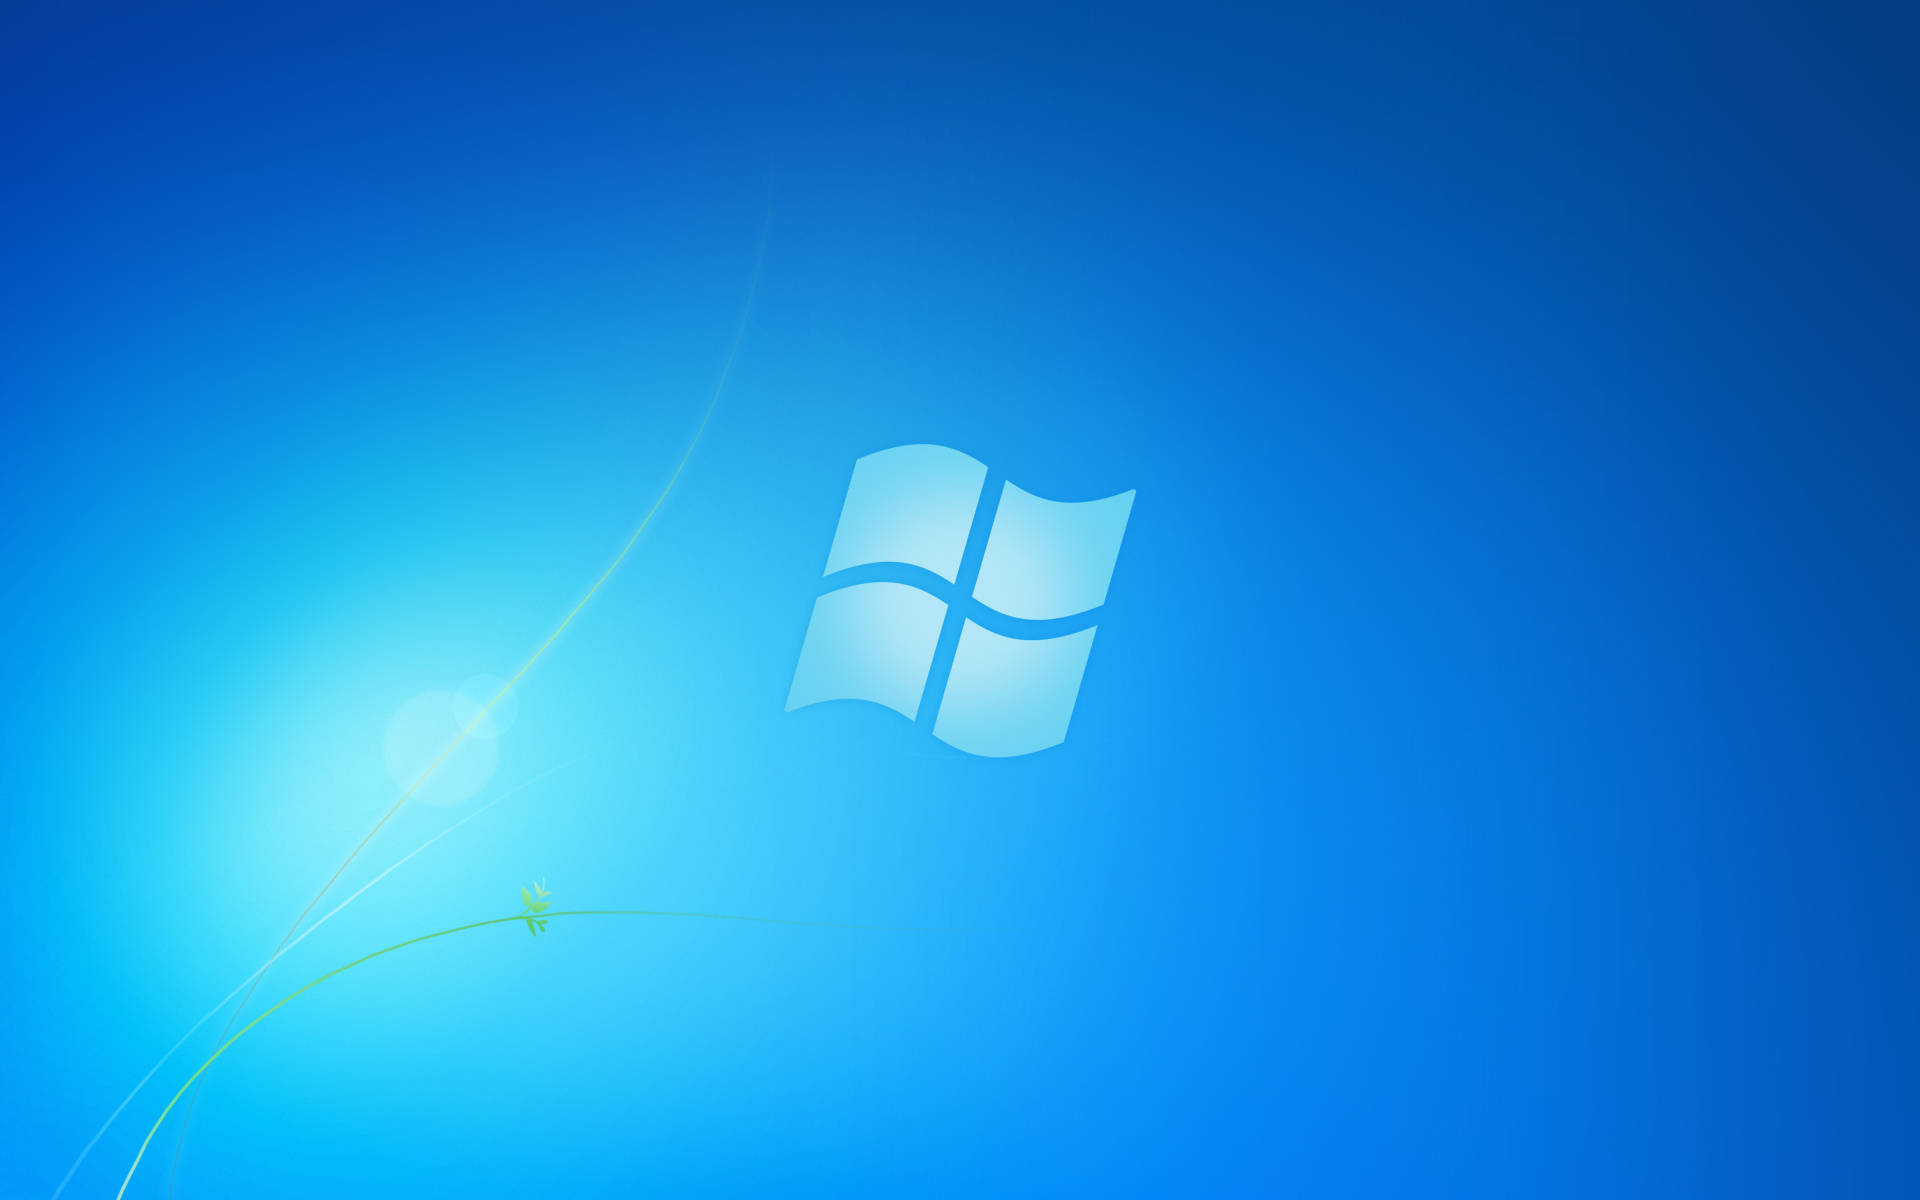 Top 999+ Windows 7 Wallpaper Full HD, 4K✅Free to Use